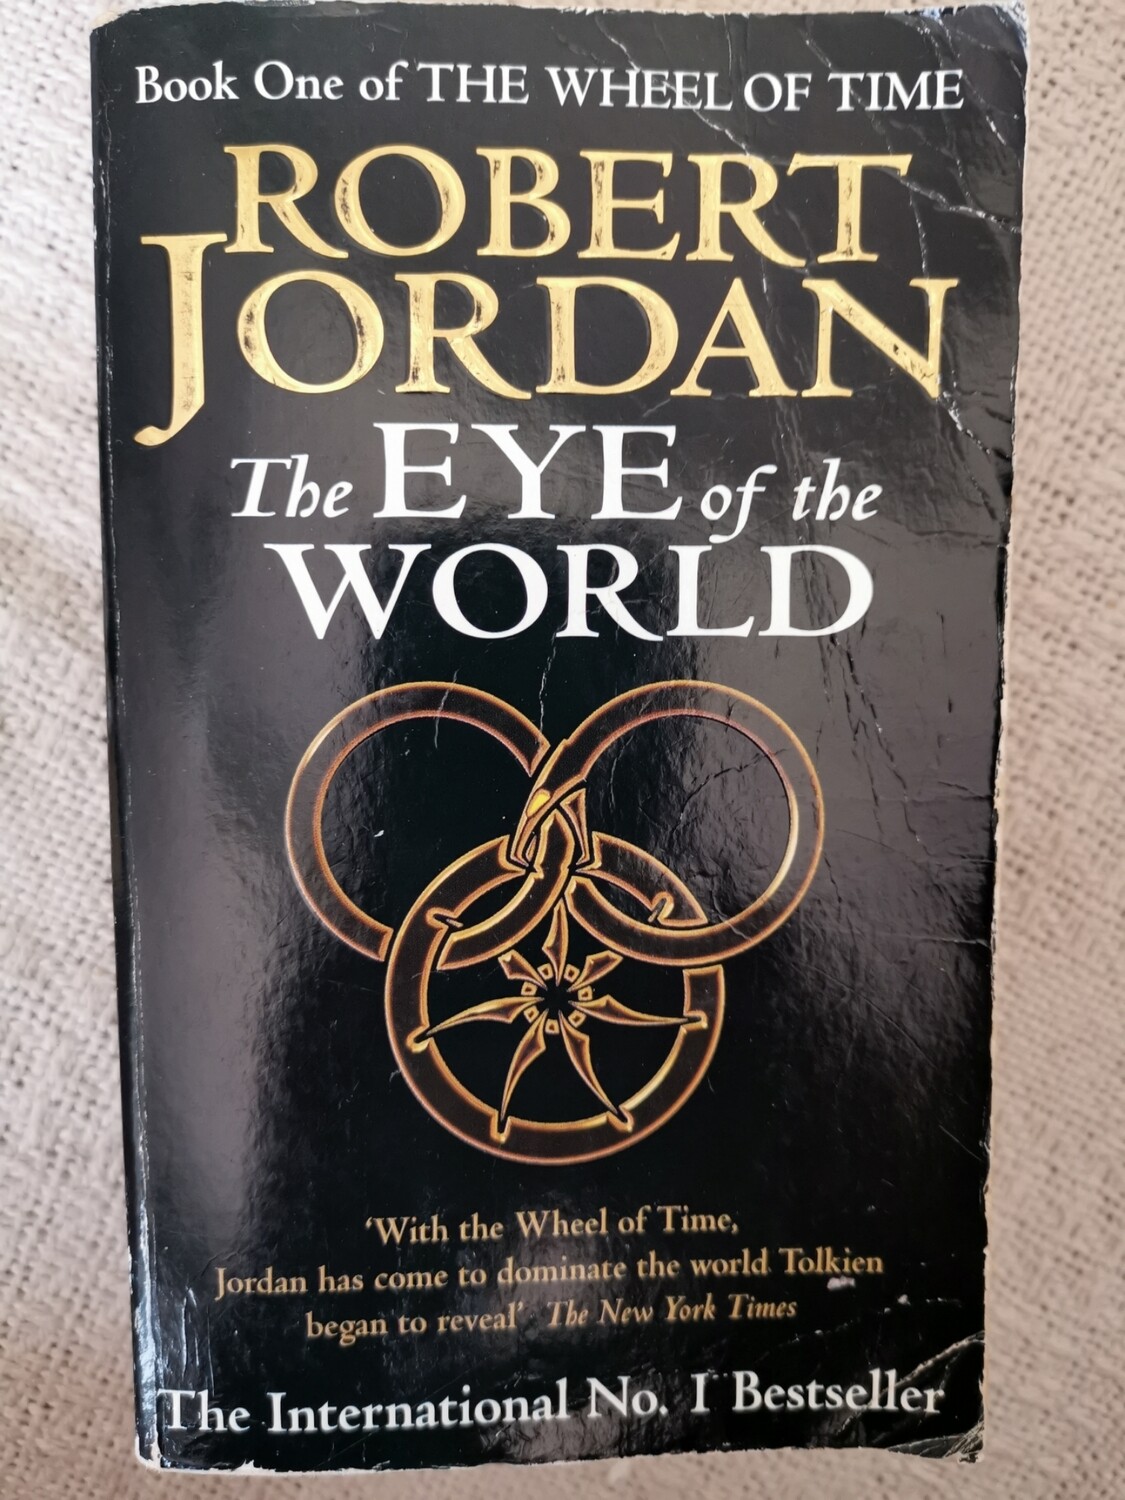 The eye of the world, Robert Jordan